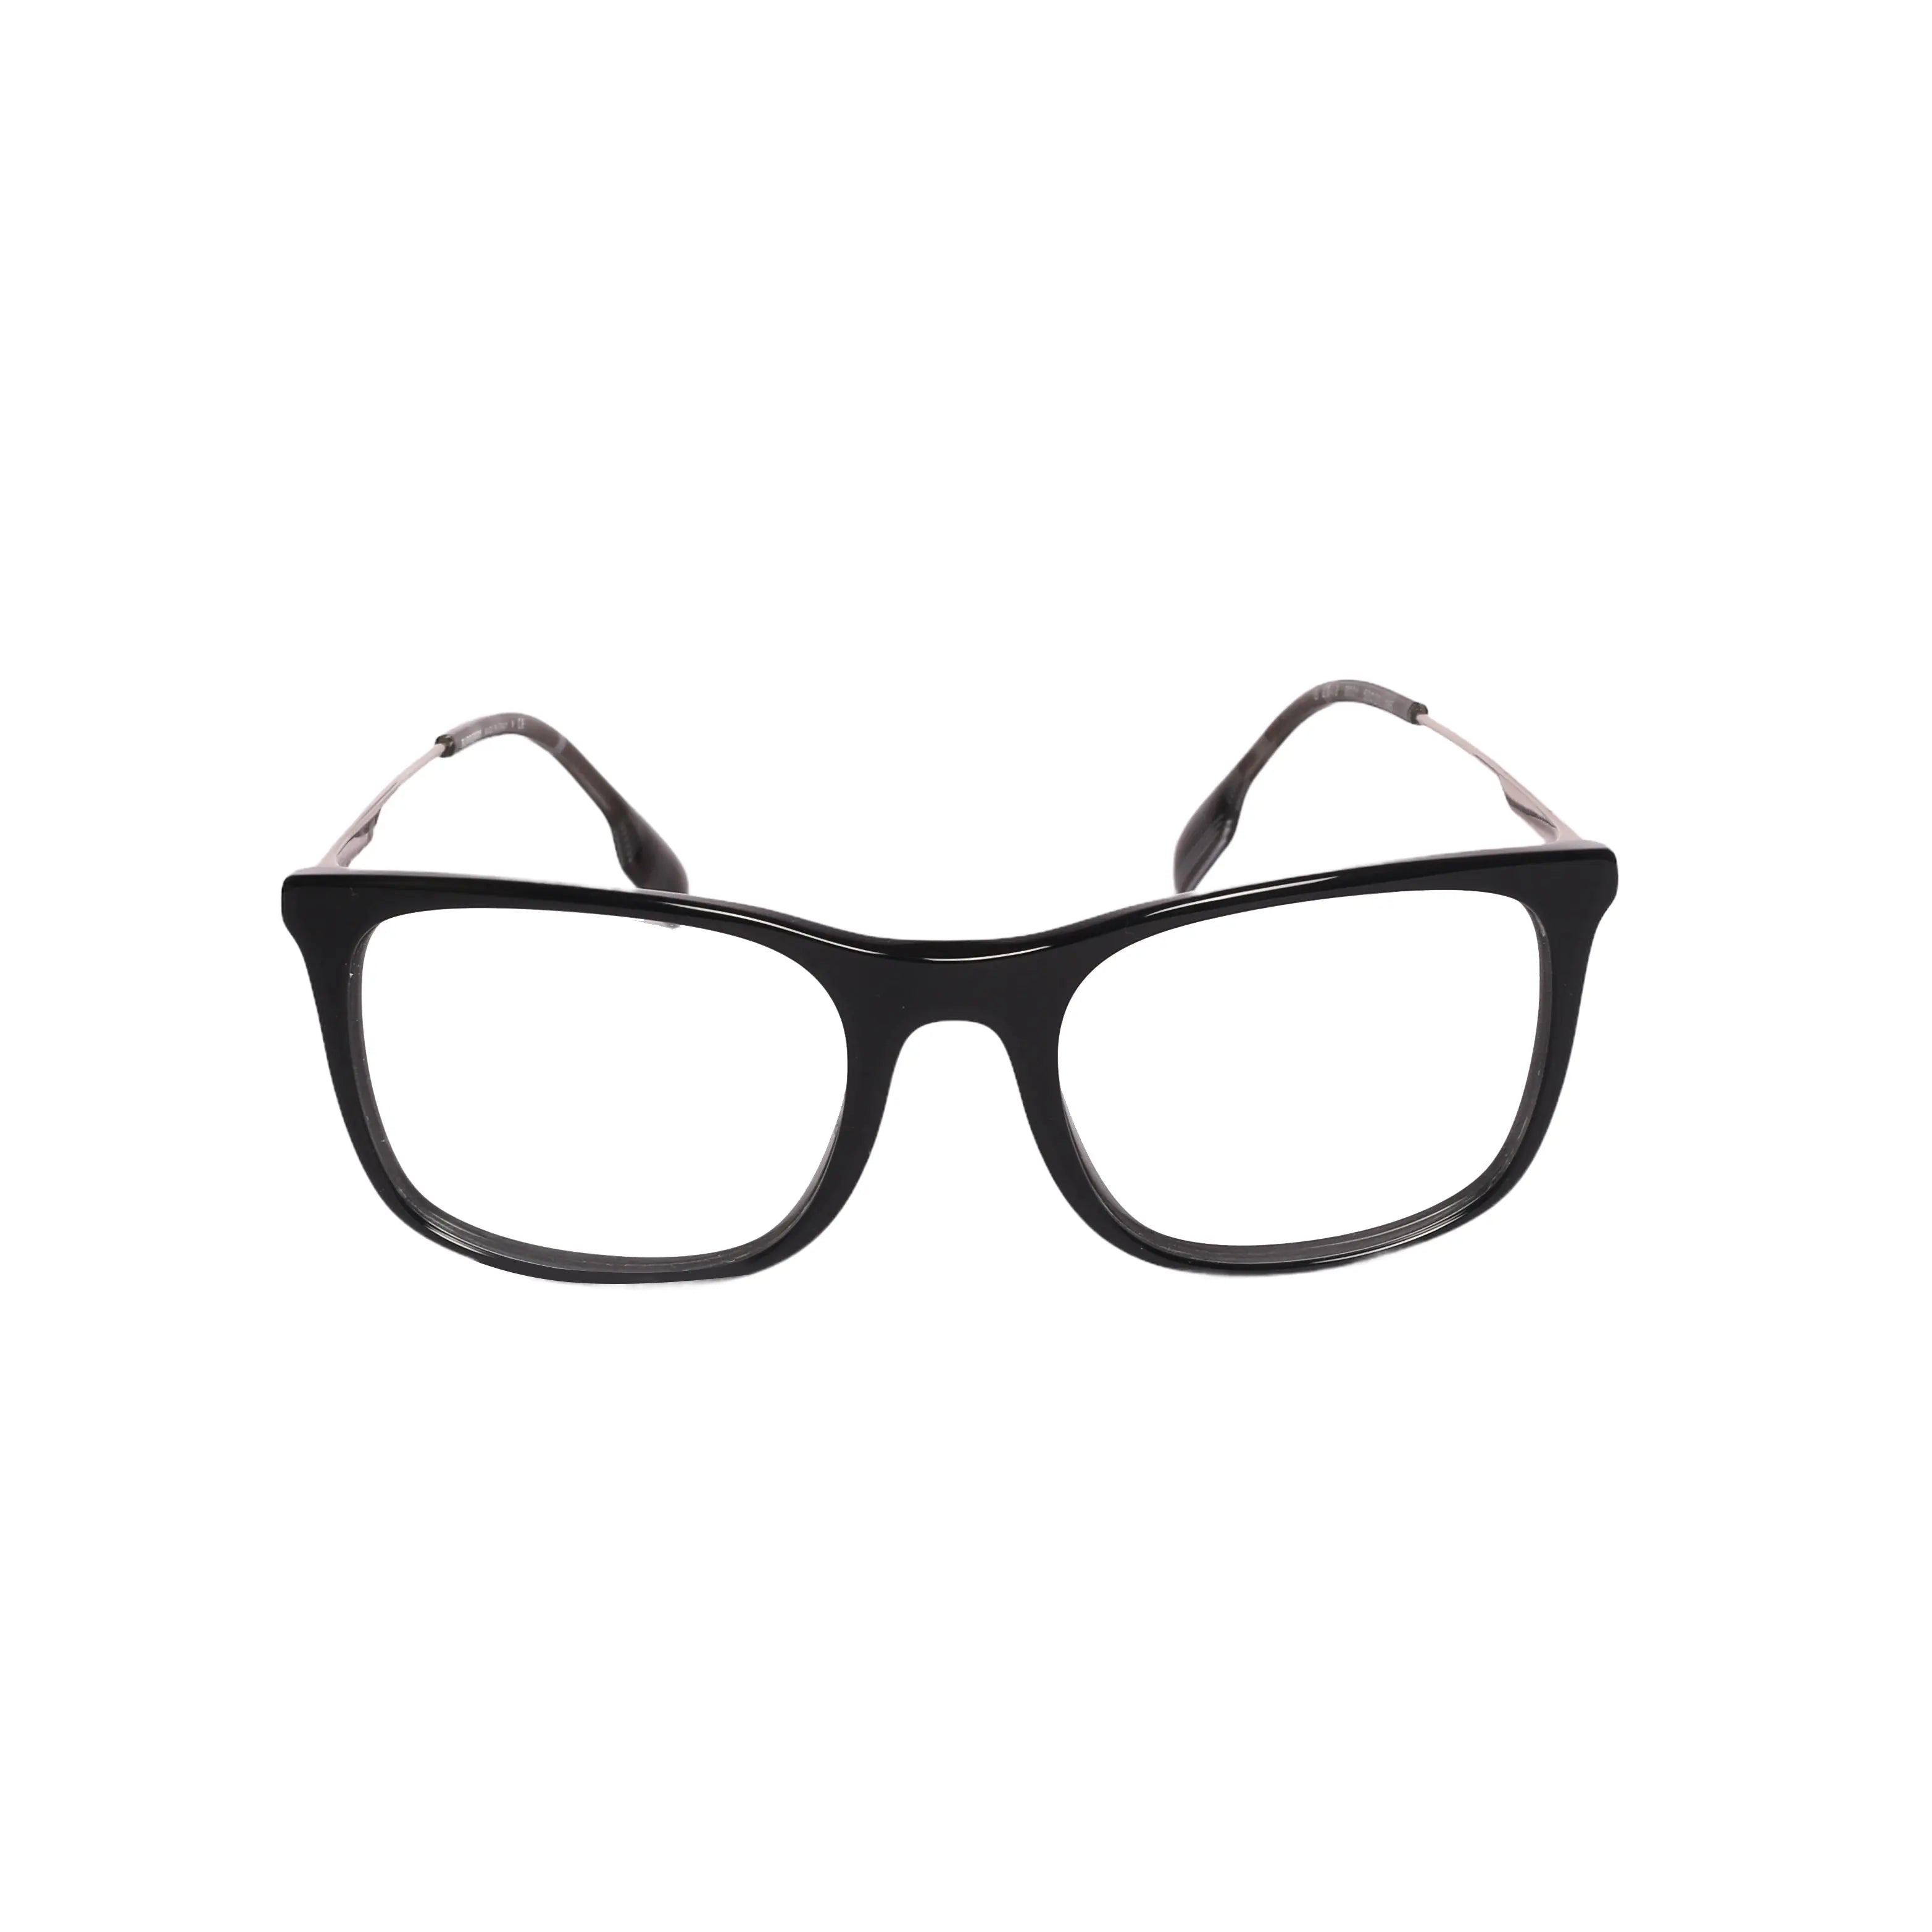 Burberry BE4291 01 Grey & Matte Black Sunglasses | Sunglass Hut USA